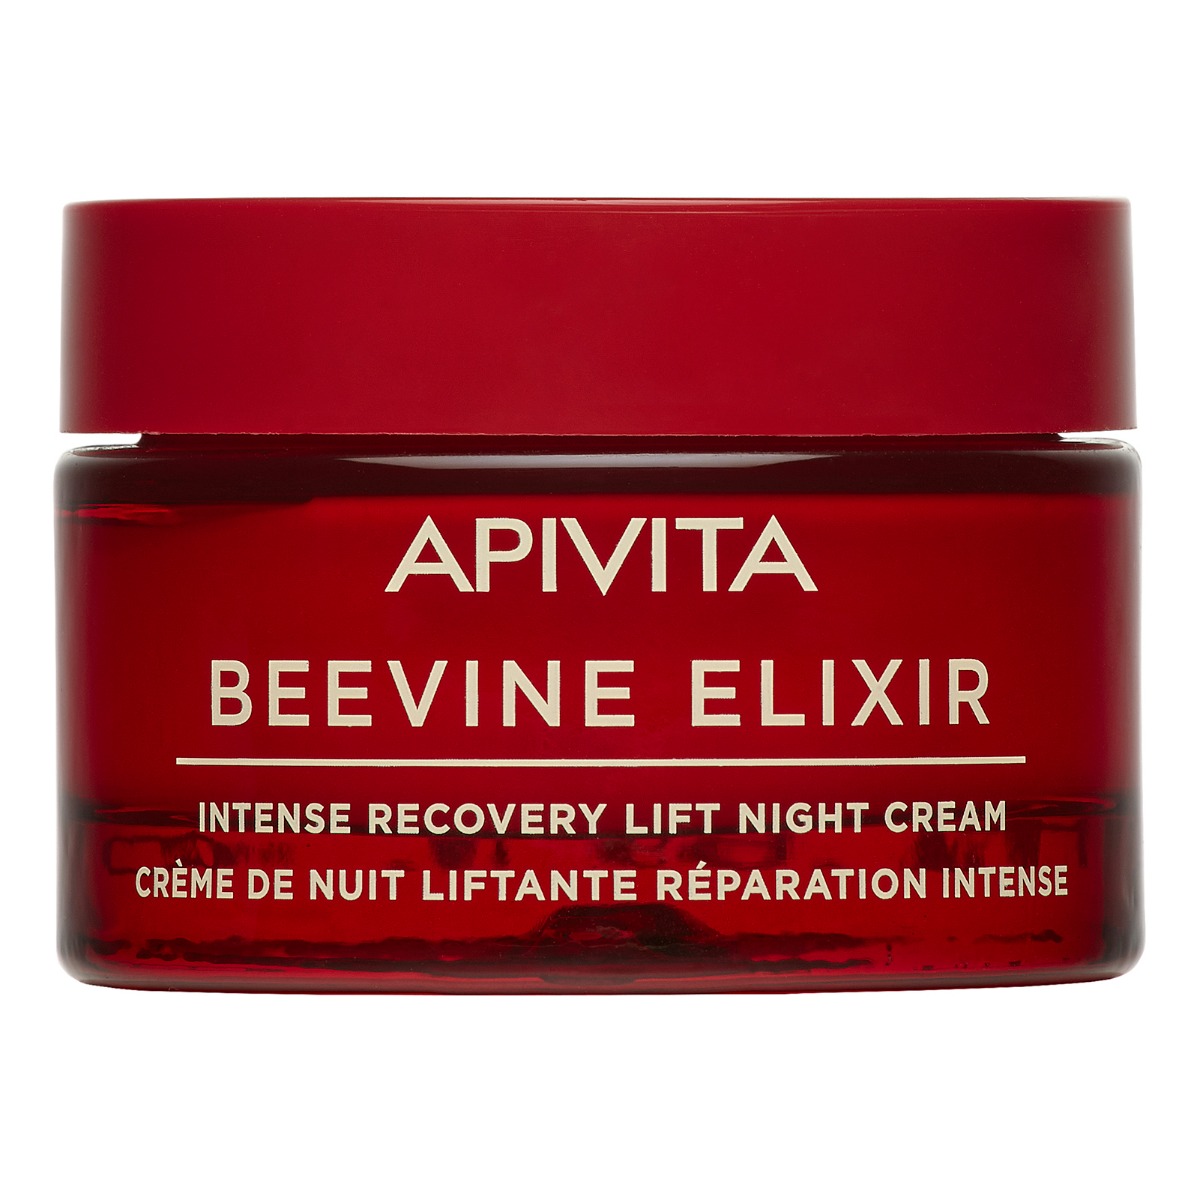 APIVITA Beevine Elixir intense recovery lift night cream 50 ml